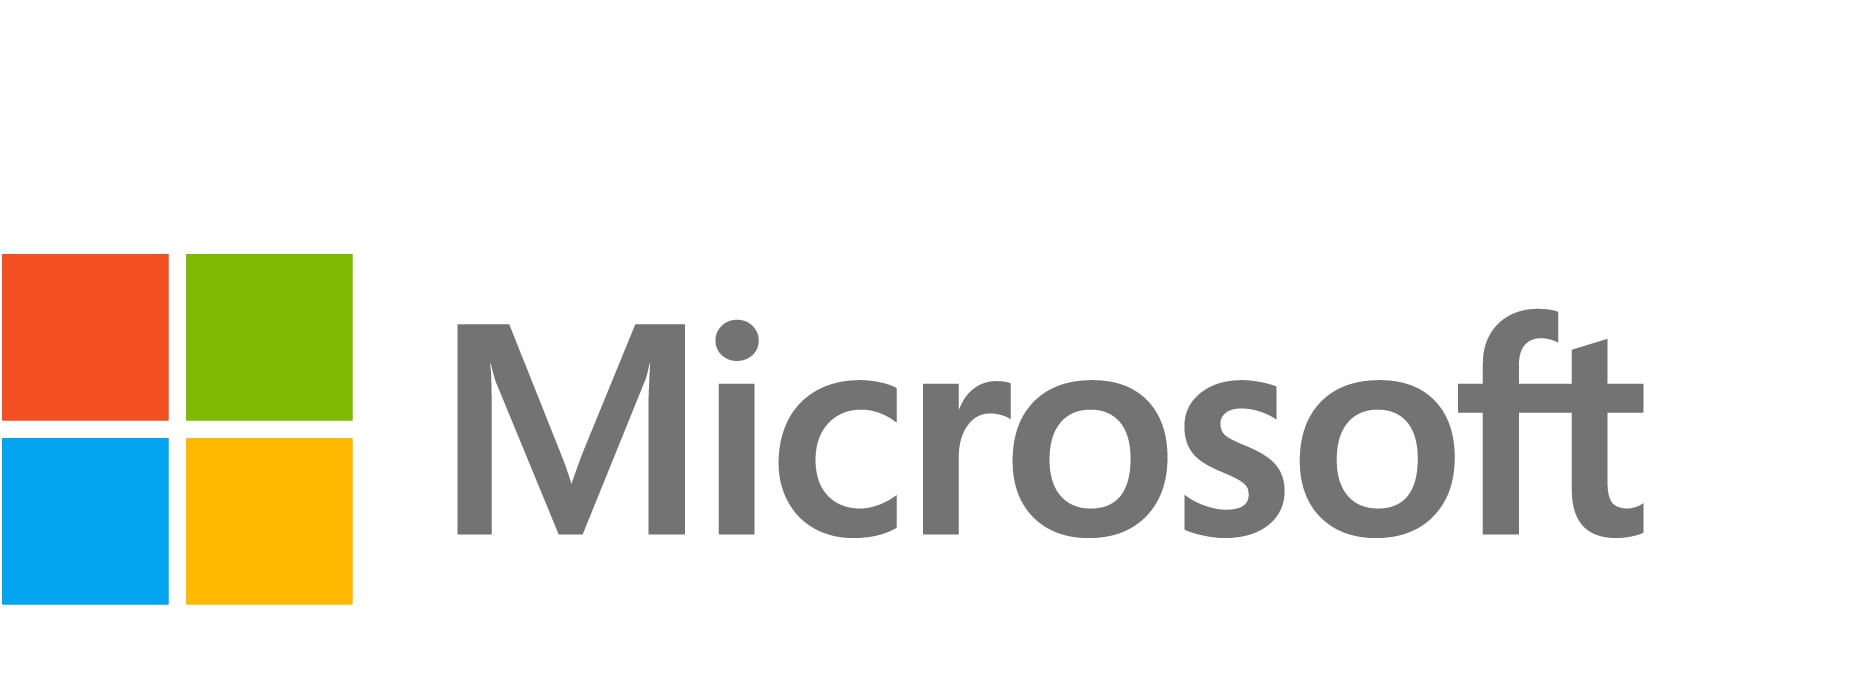 Microsoft Office 365 (Plan G5) - subscription license - 1 user